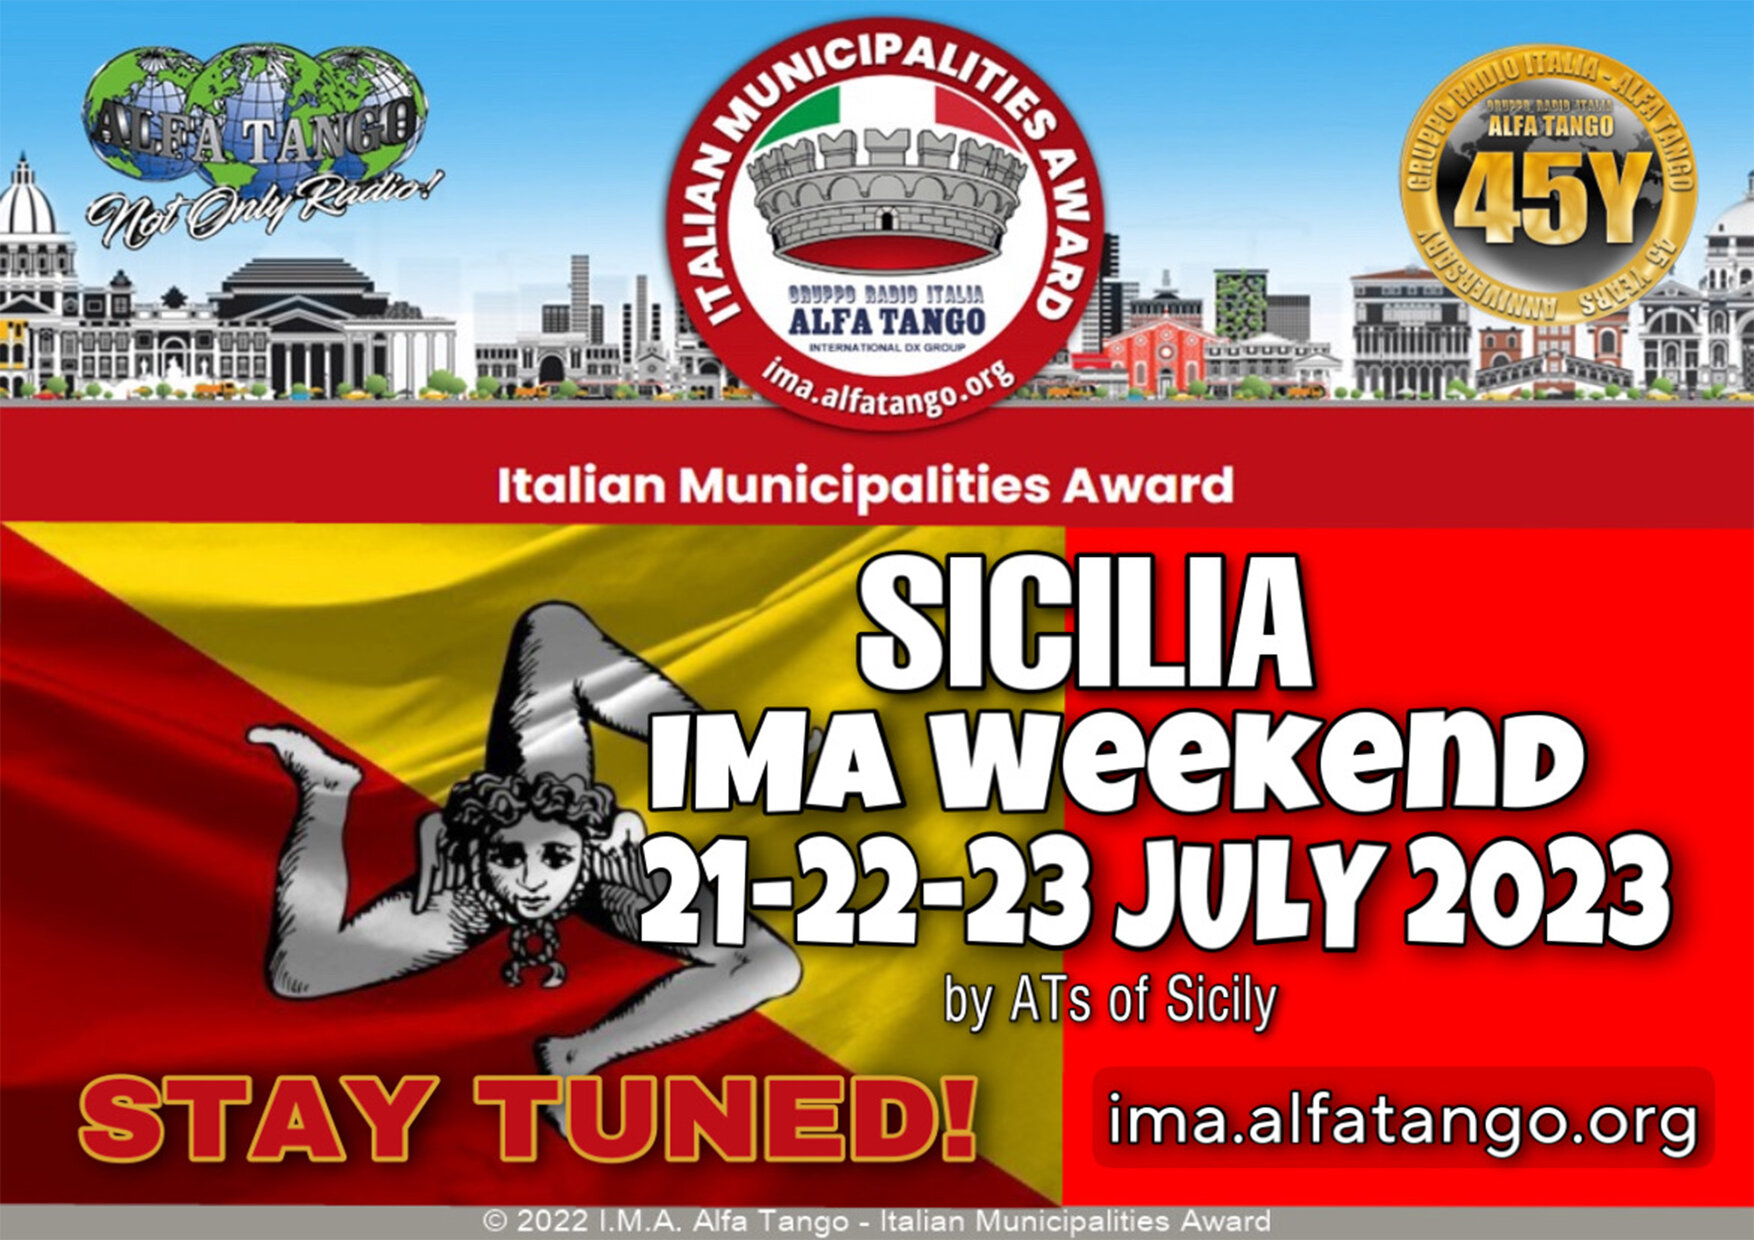 IMA weekend - Sicily 2023